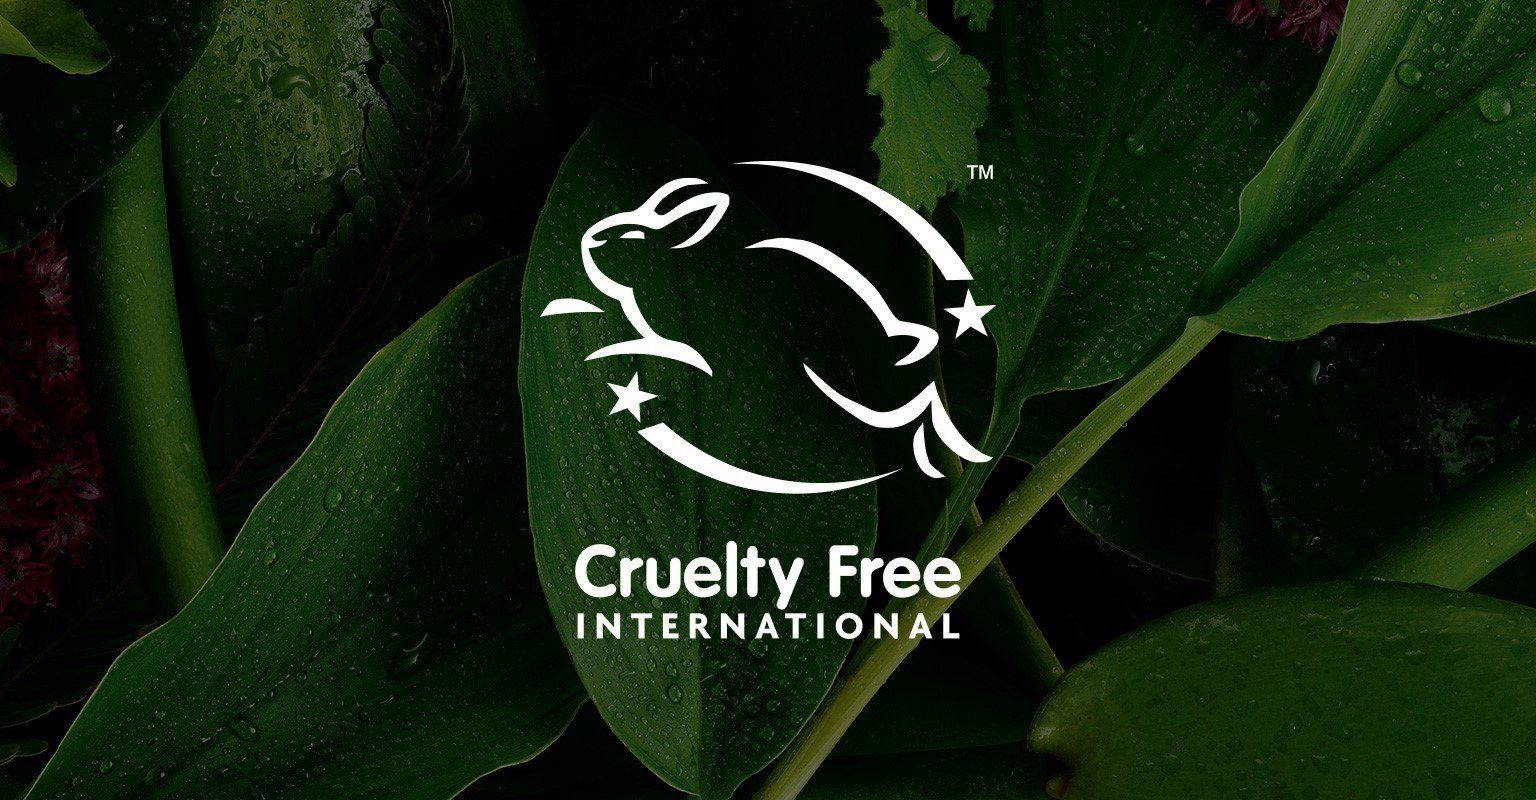 leaping bunny cruelty free logo